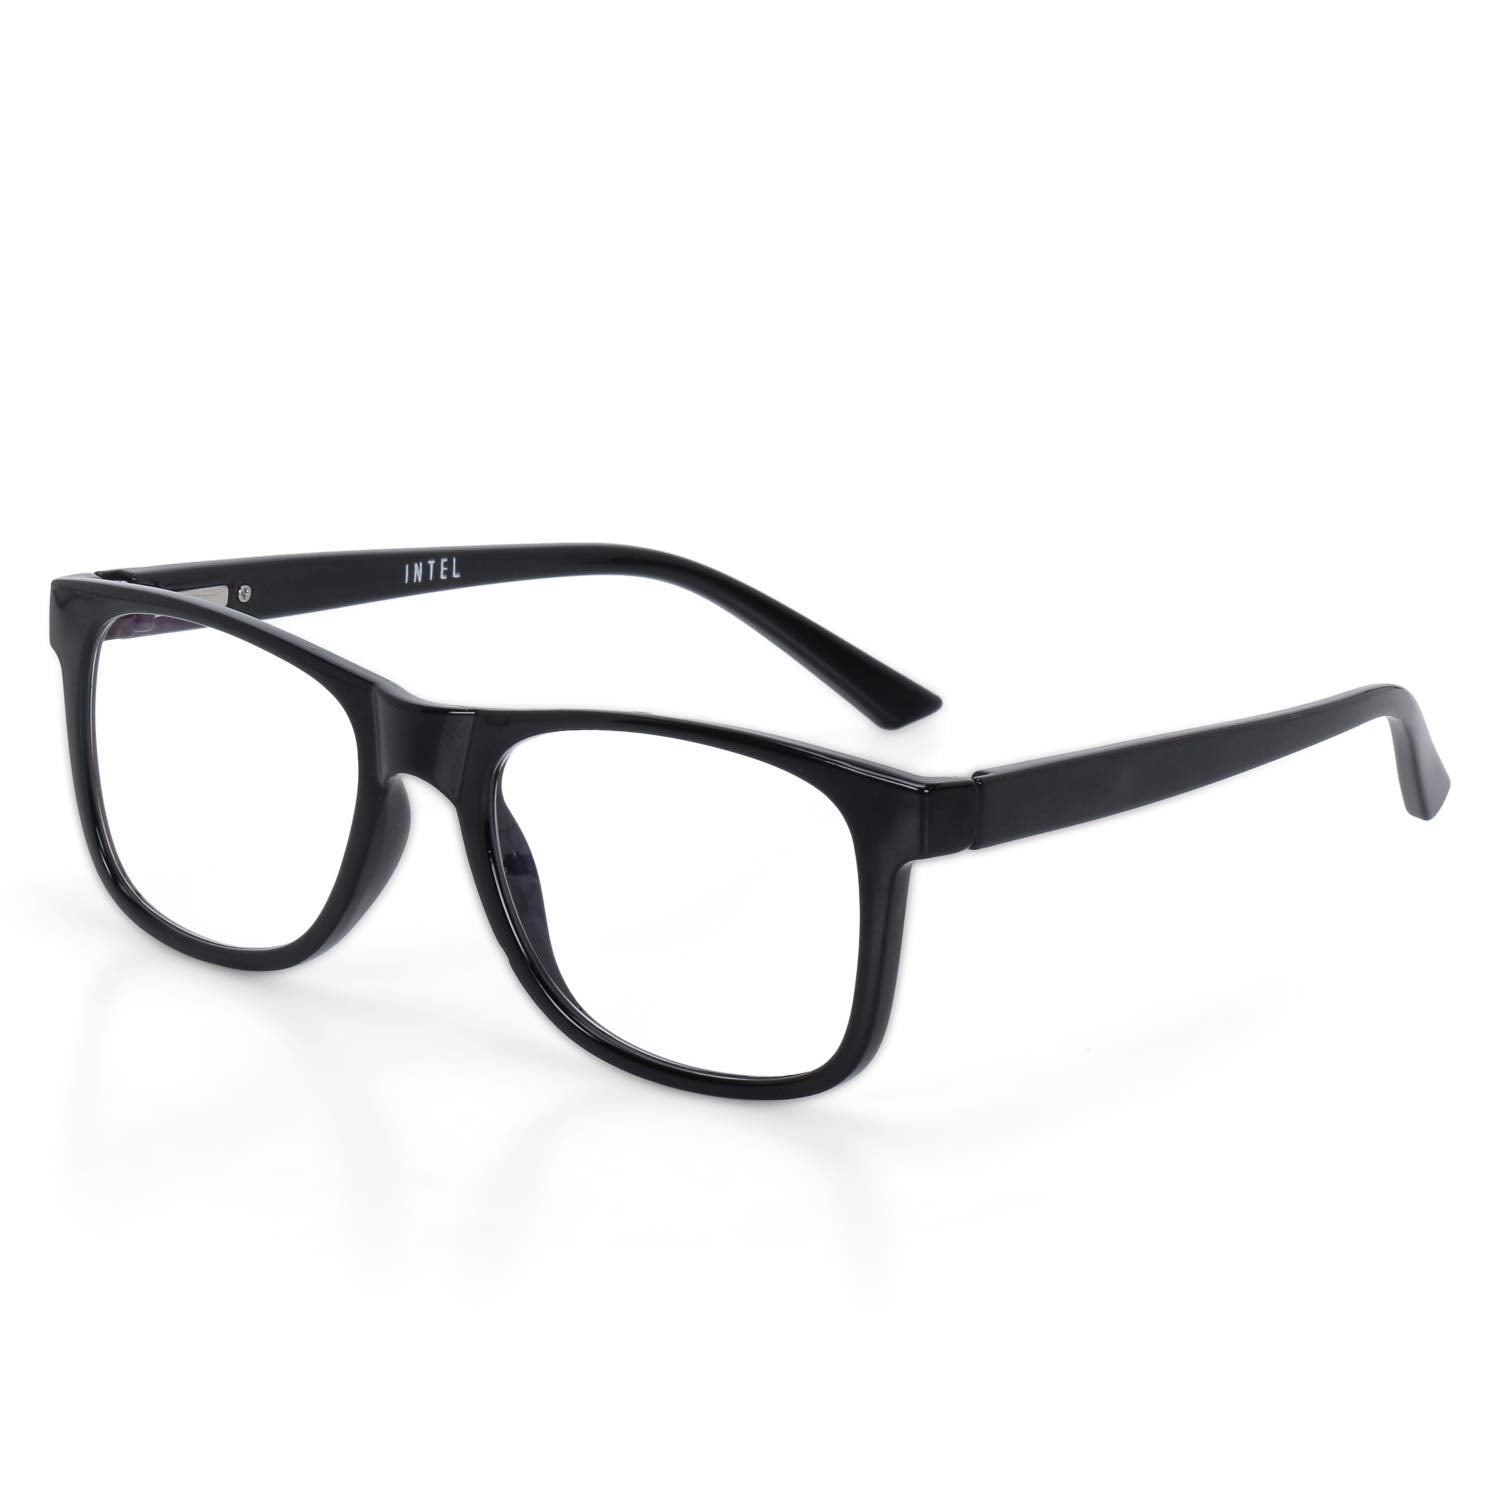 Intellilens® Navigator Blue Cut Computer Glasses for Eye Protection | Zero Power, Anti Glare & Blue Light Filter Glasses | UV Protection Specs for Men & Women (Black) (50-20-138)